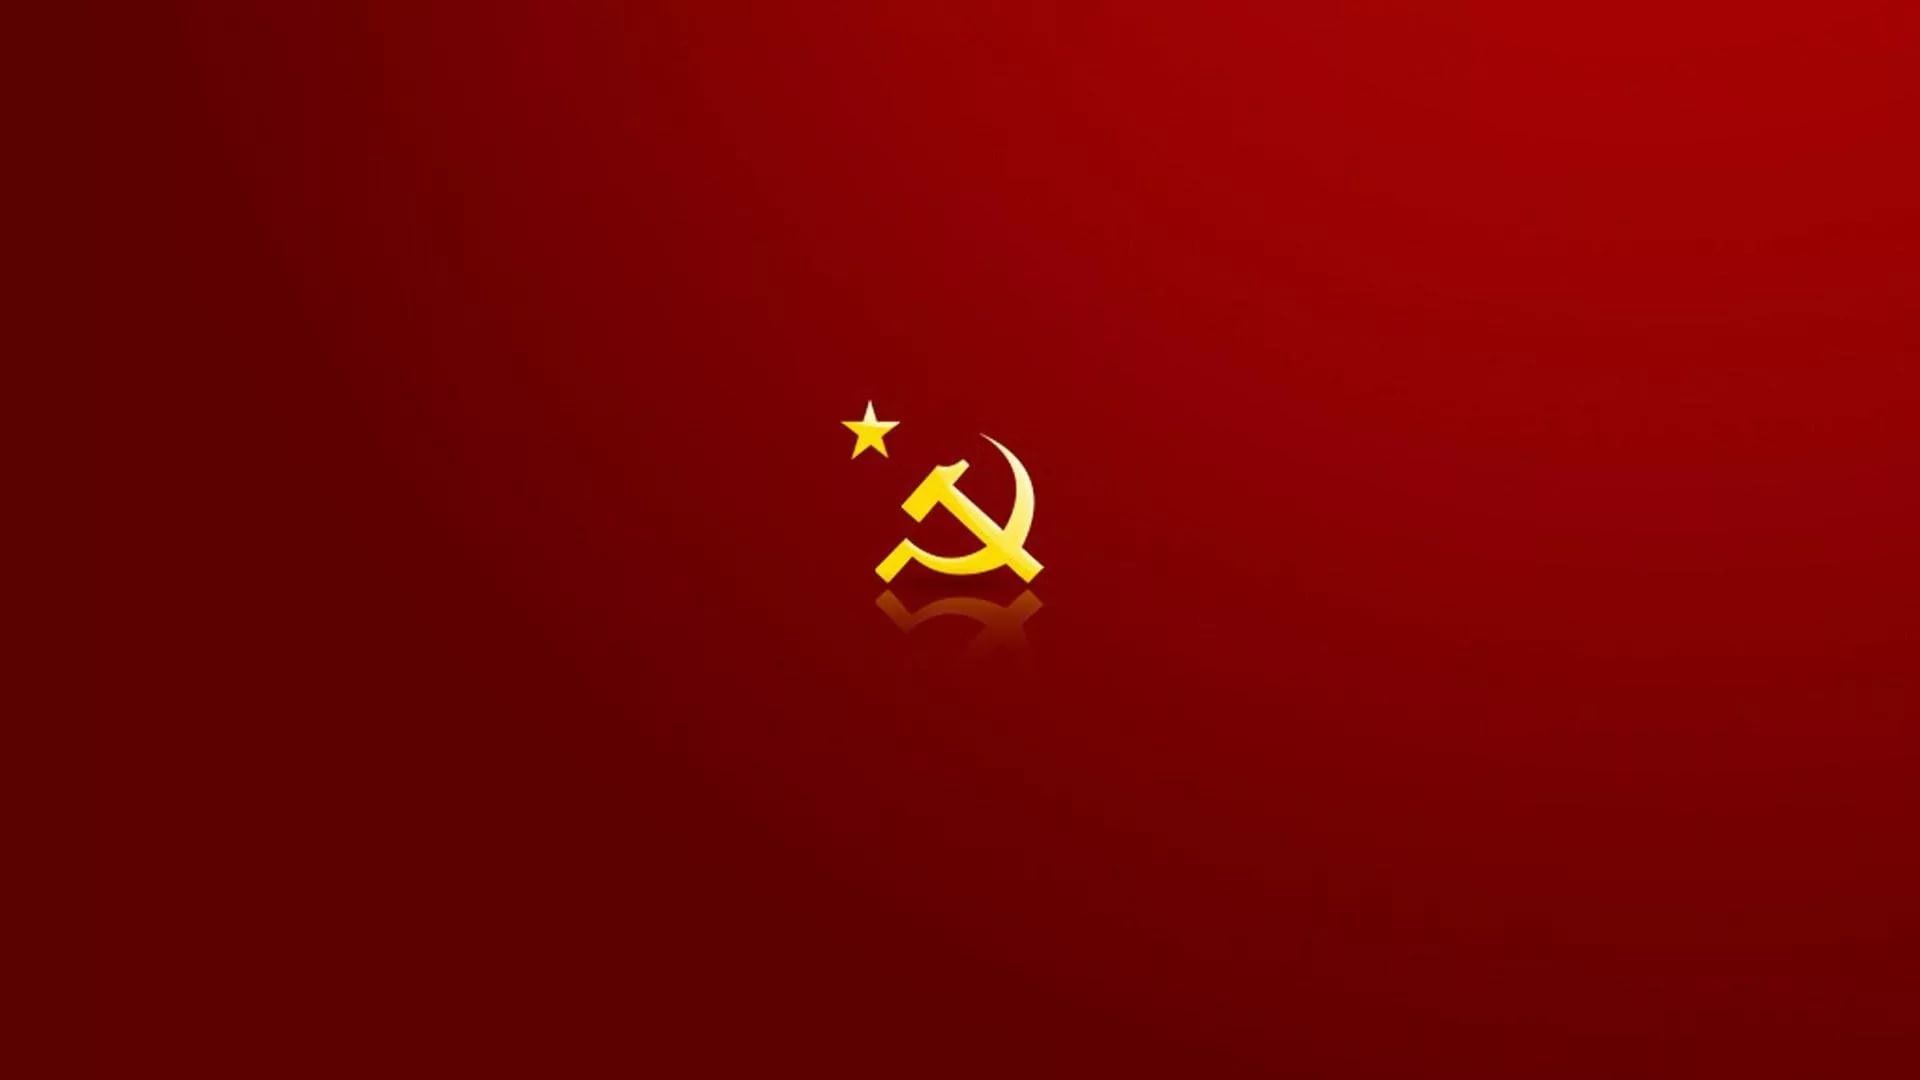 Communism wallpaper image hd